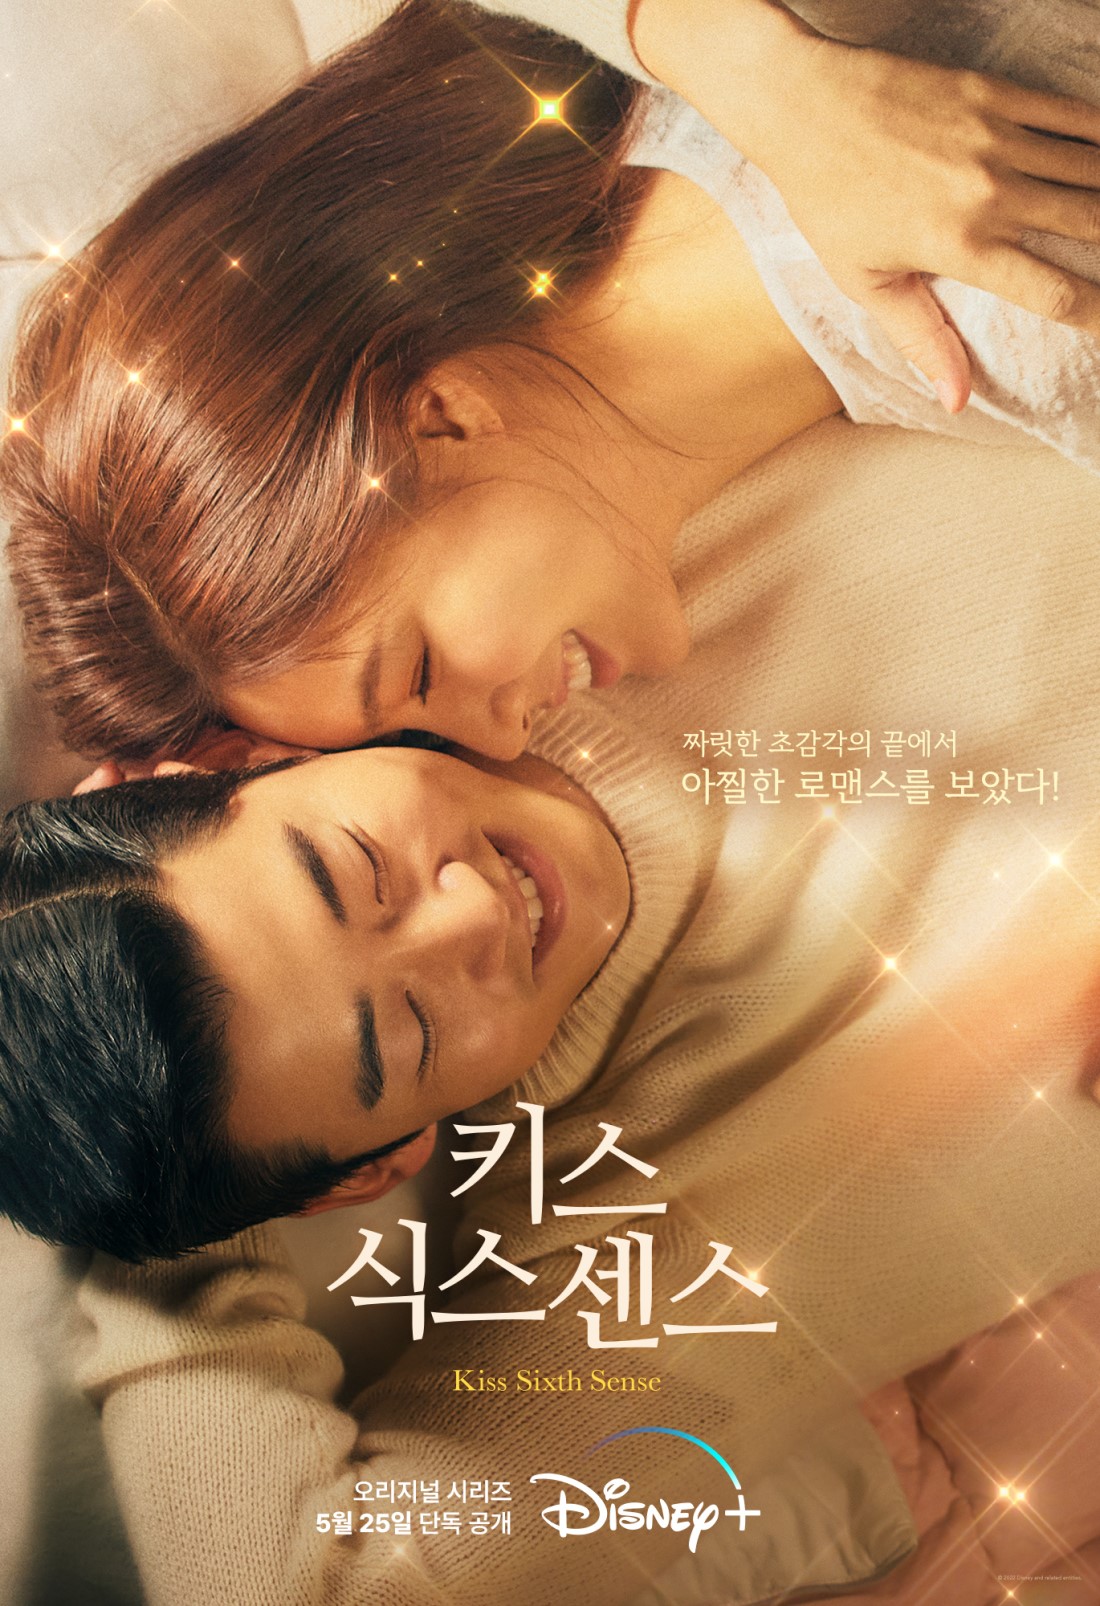 Korean movie sex scene yoon gye sang